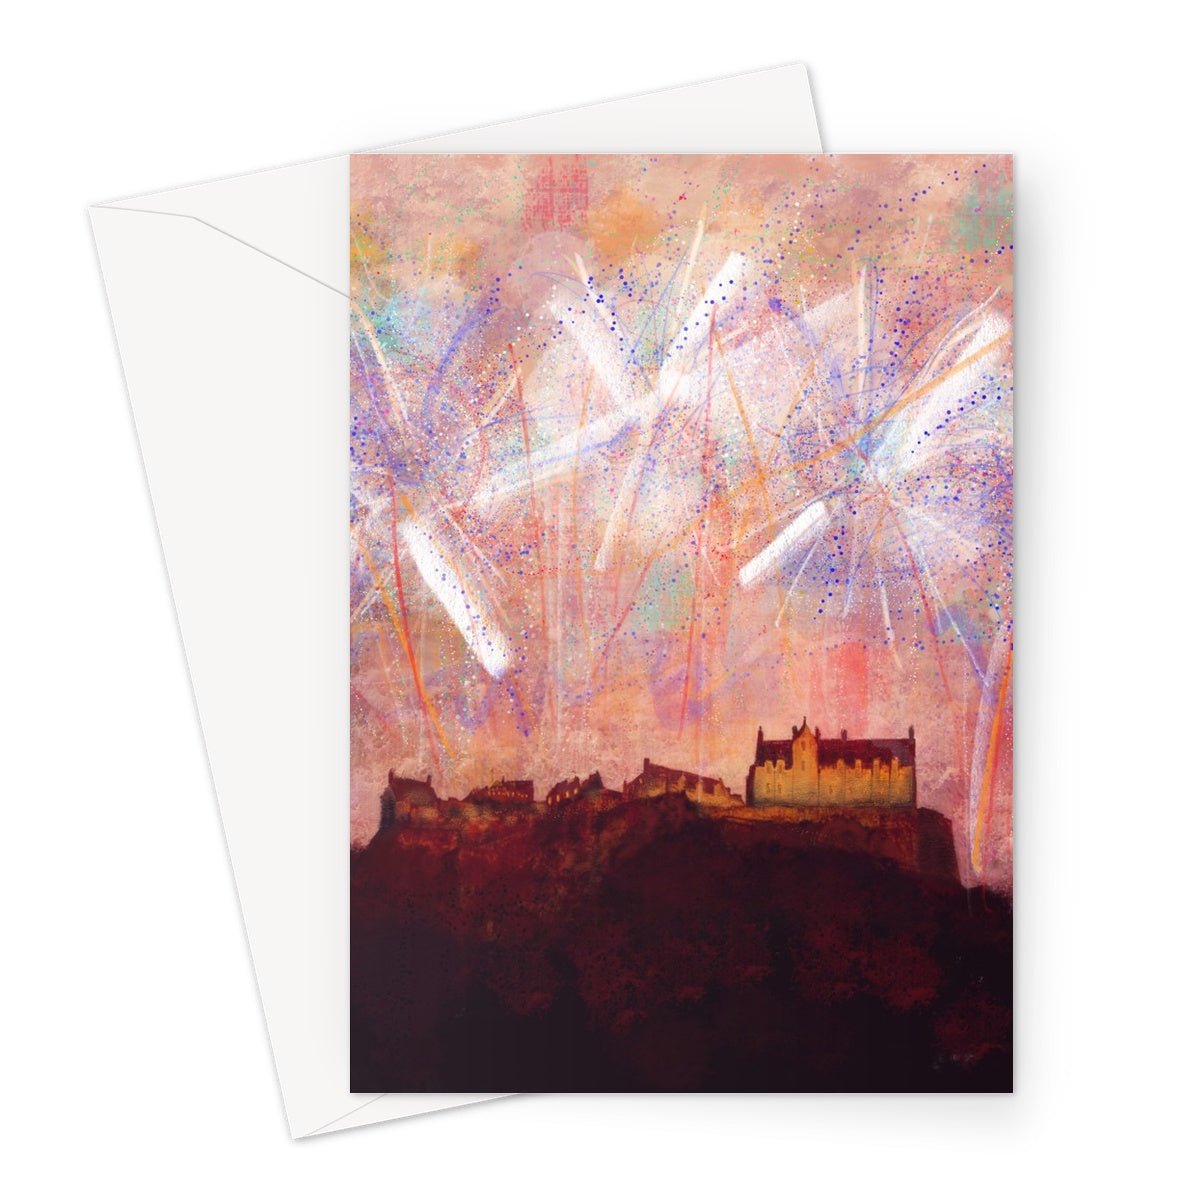 Edinburgh Castle Fireworks Art Gifts Greeting Card-Greetings Cards-Edinburgh & Glasgow Art Gallery-A5 Portrait-1 Card-Paintings, Prints, Homeware, Art Gifts From Scotland By Scottish Artist Kevin Hunter